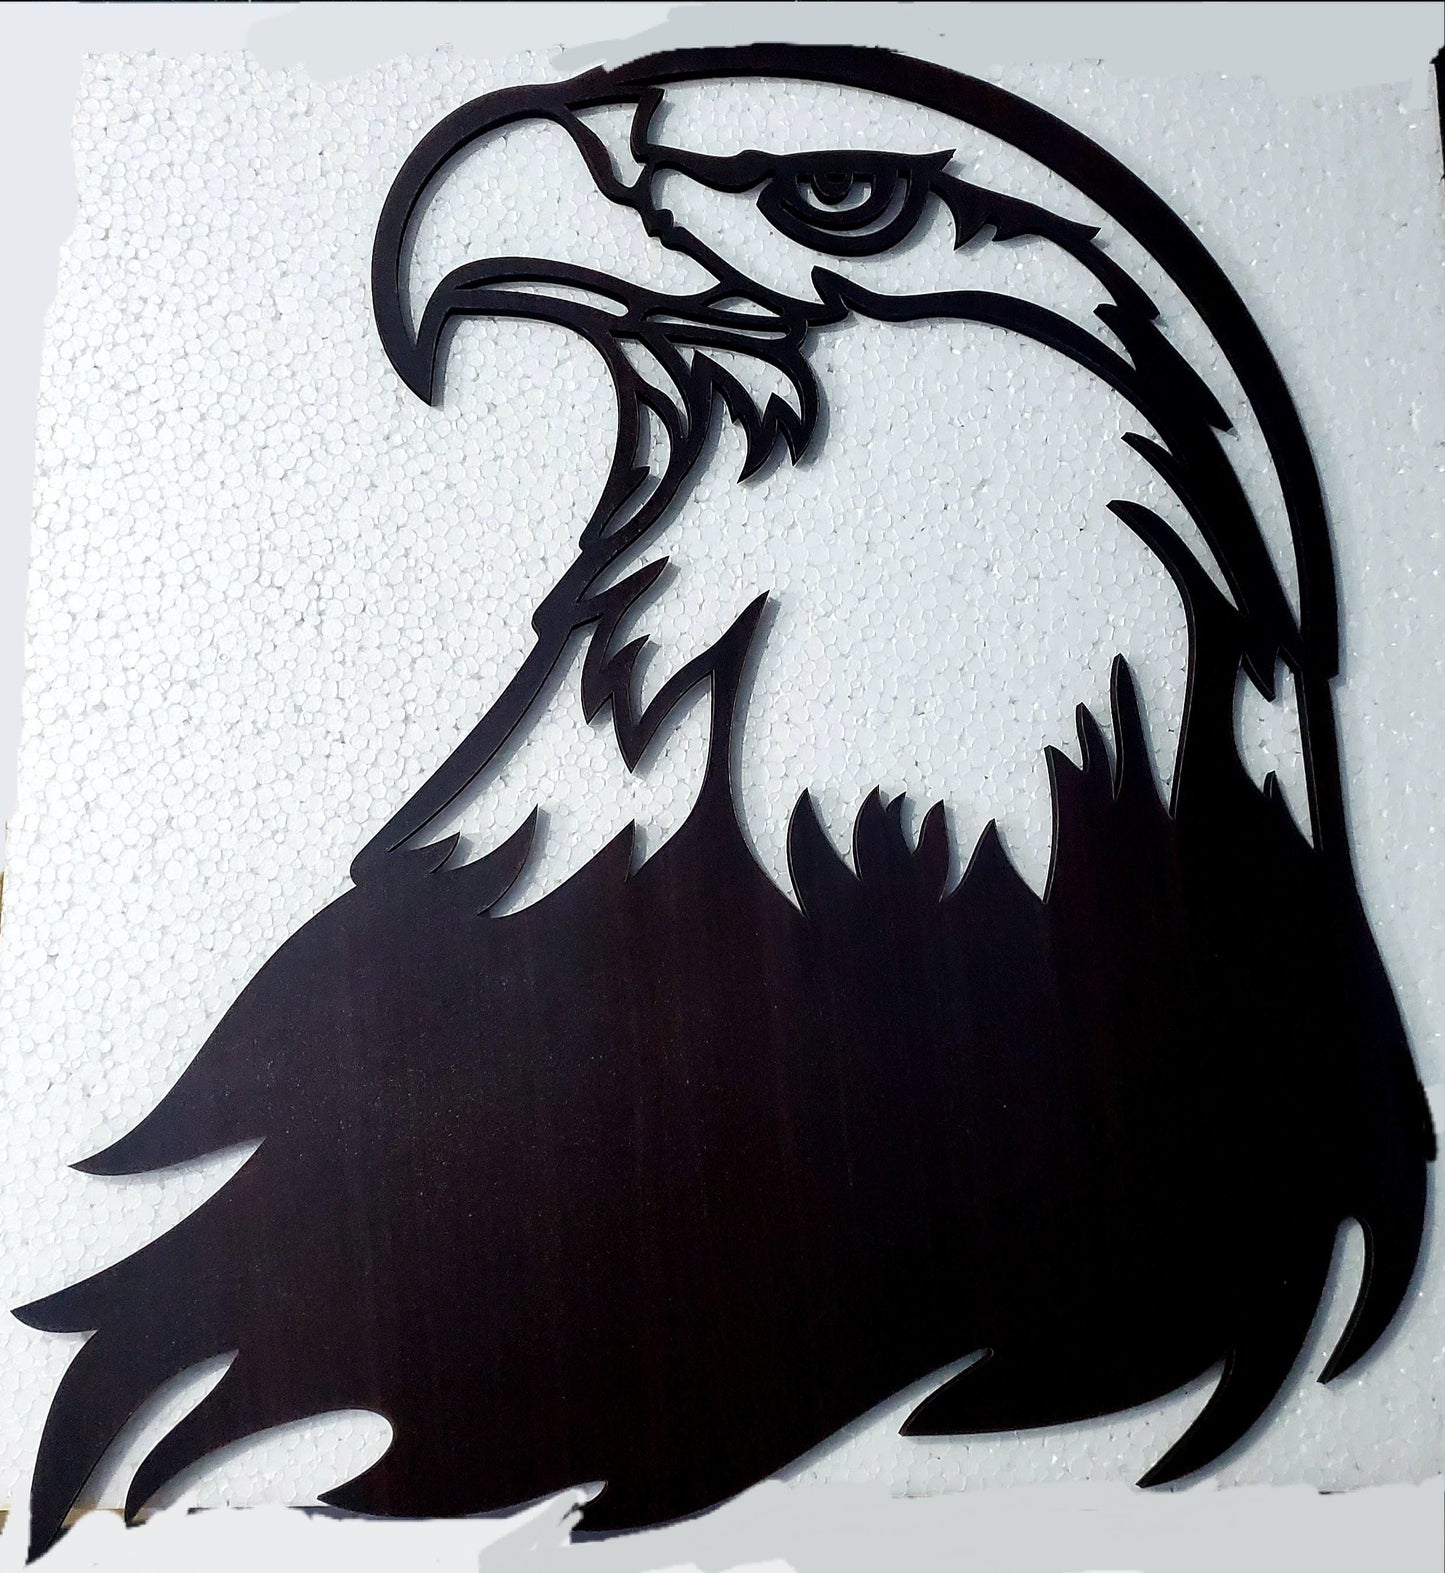 Angry Eagle Design